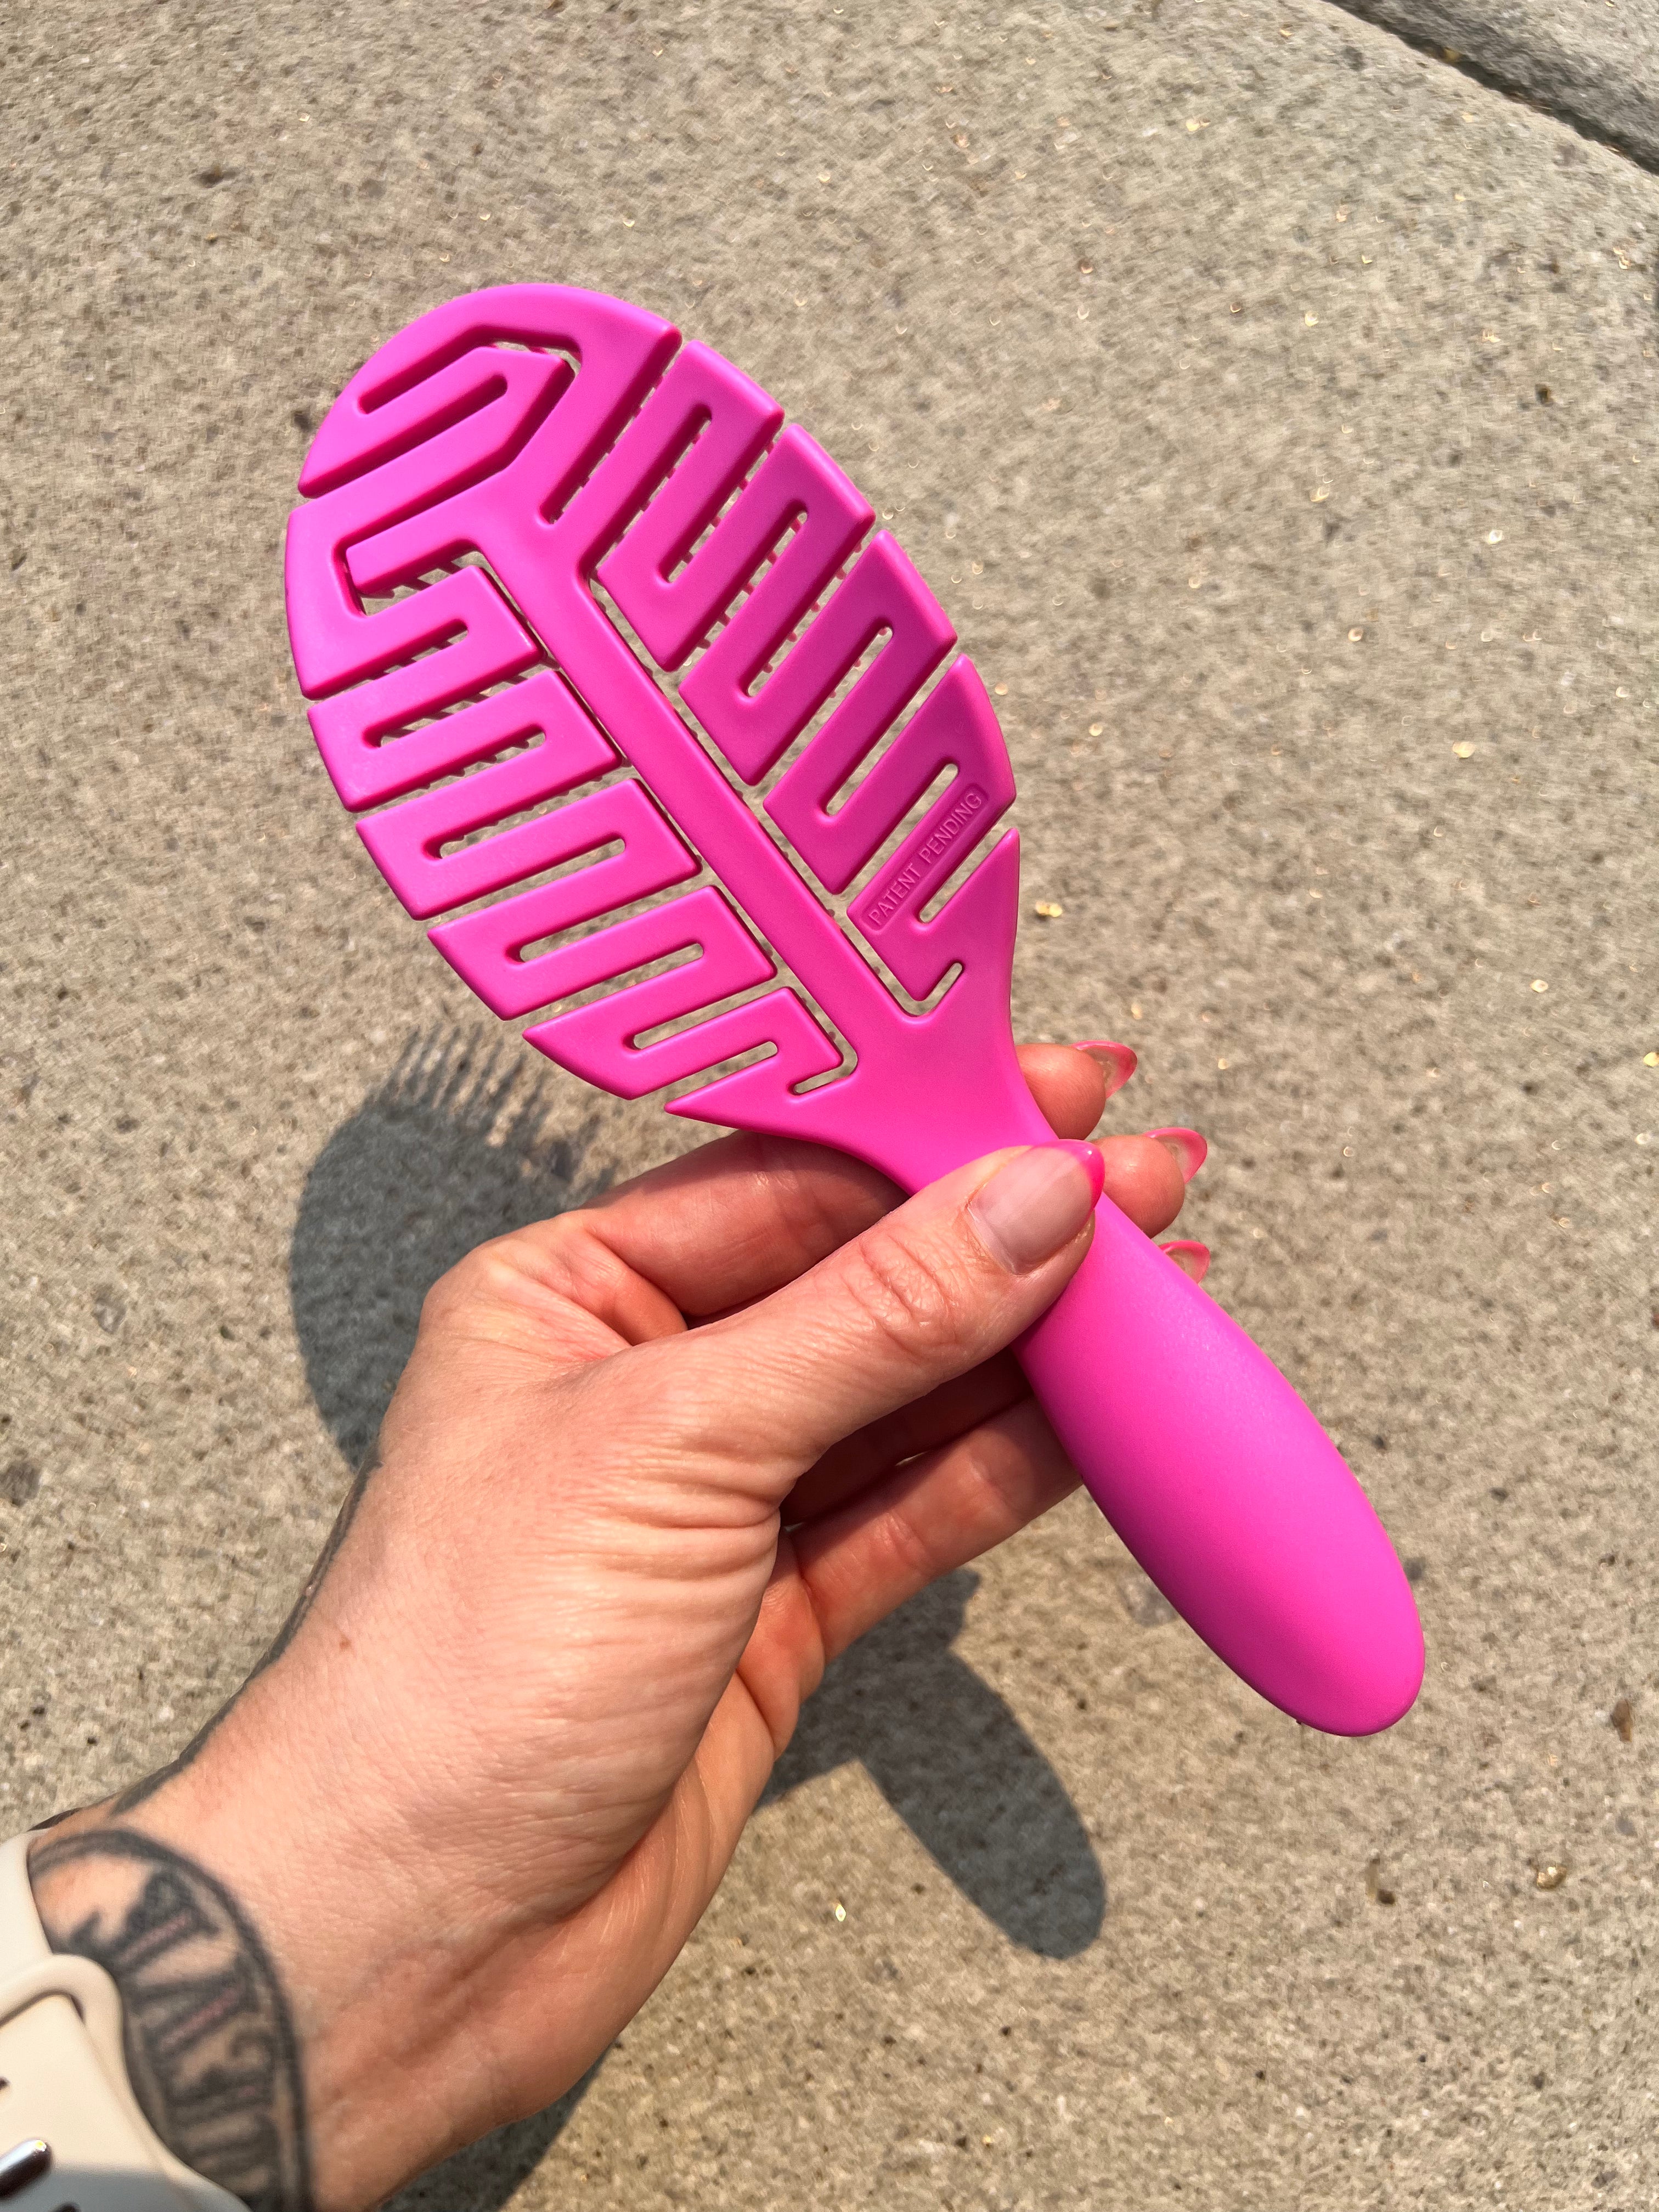 The Wet Hair Brush Pink